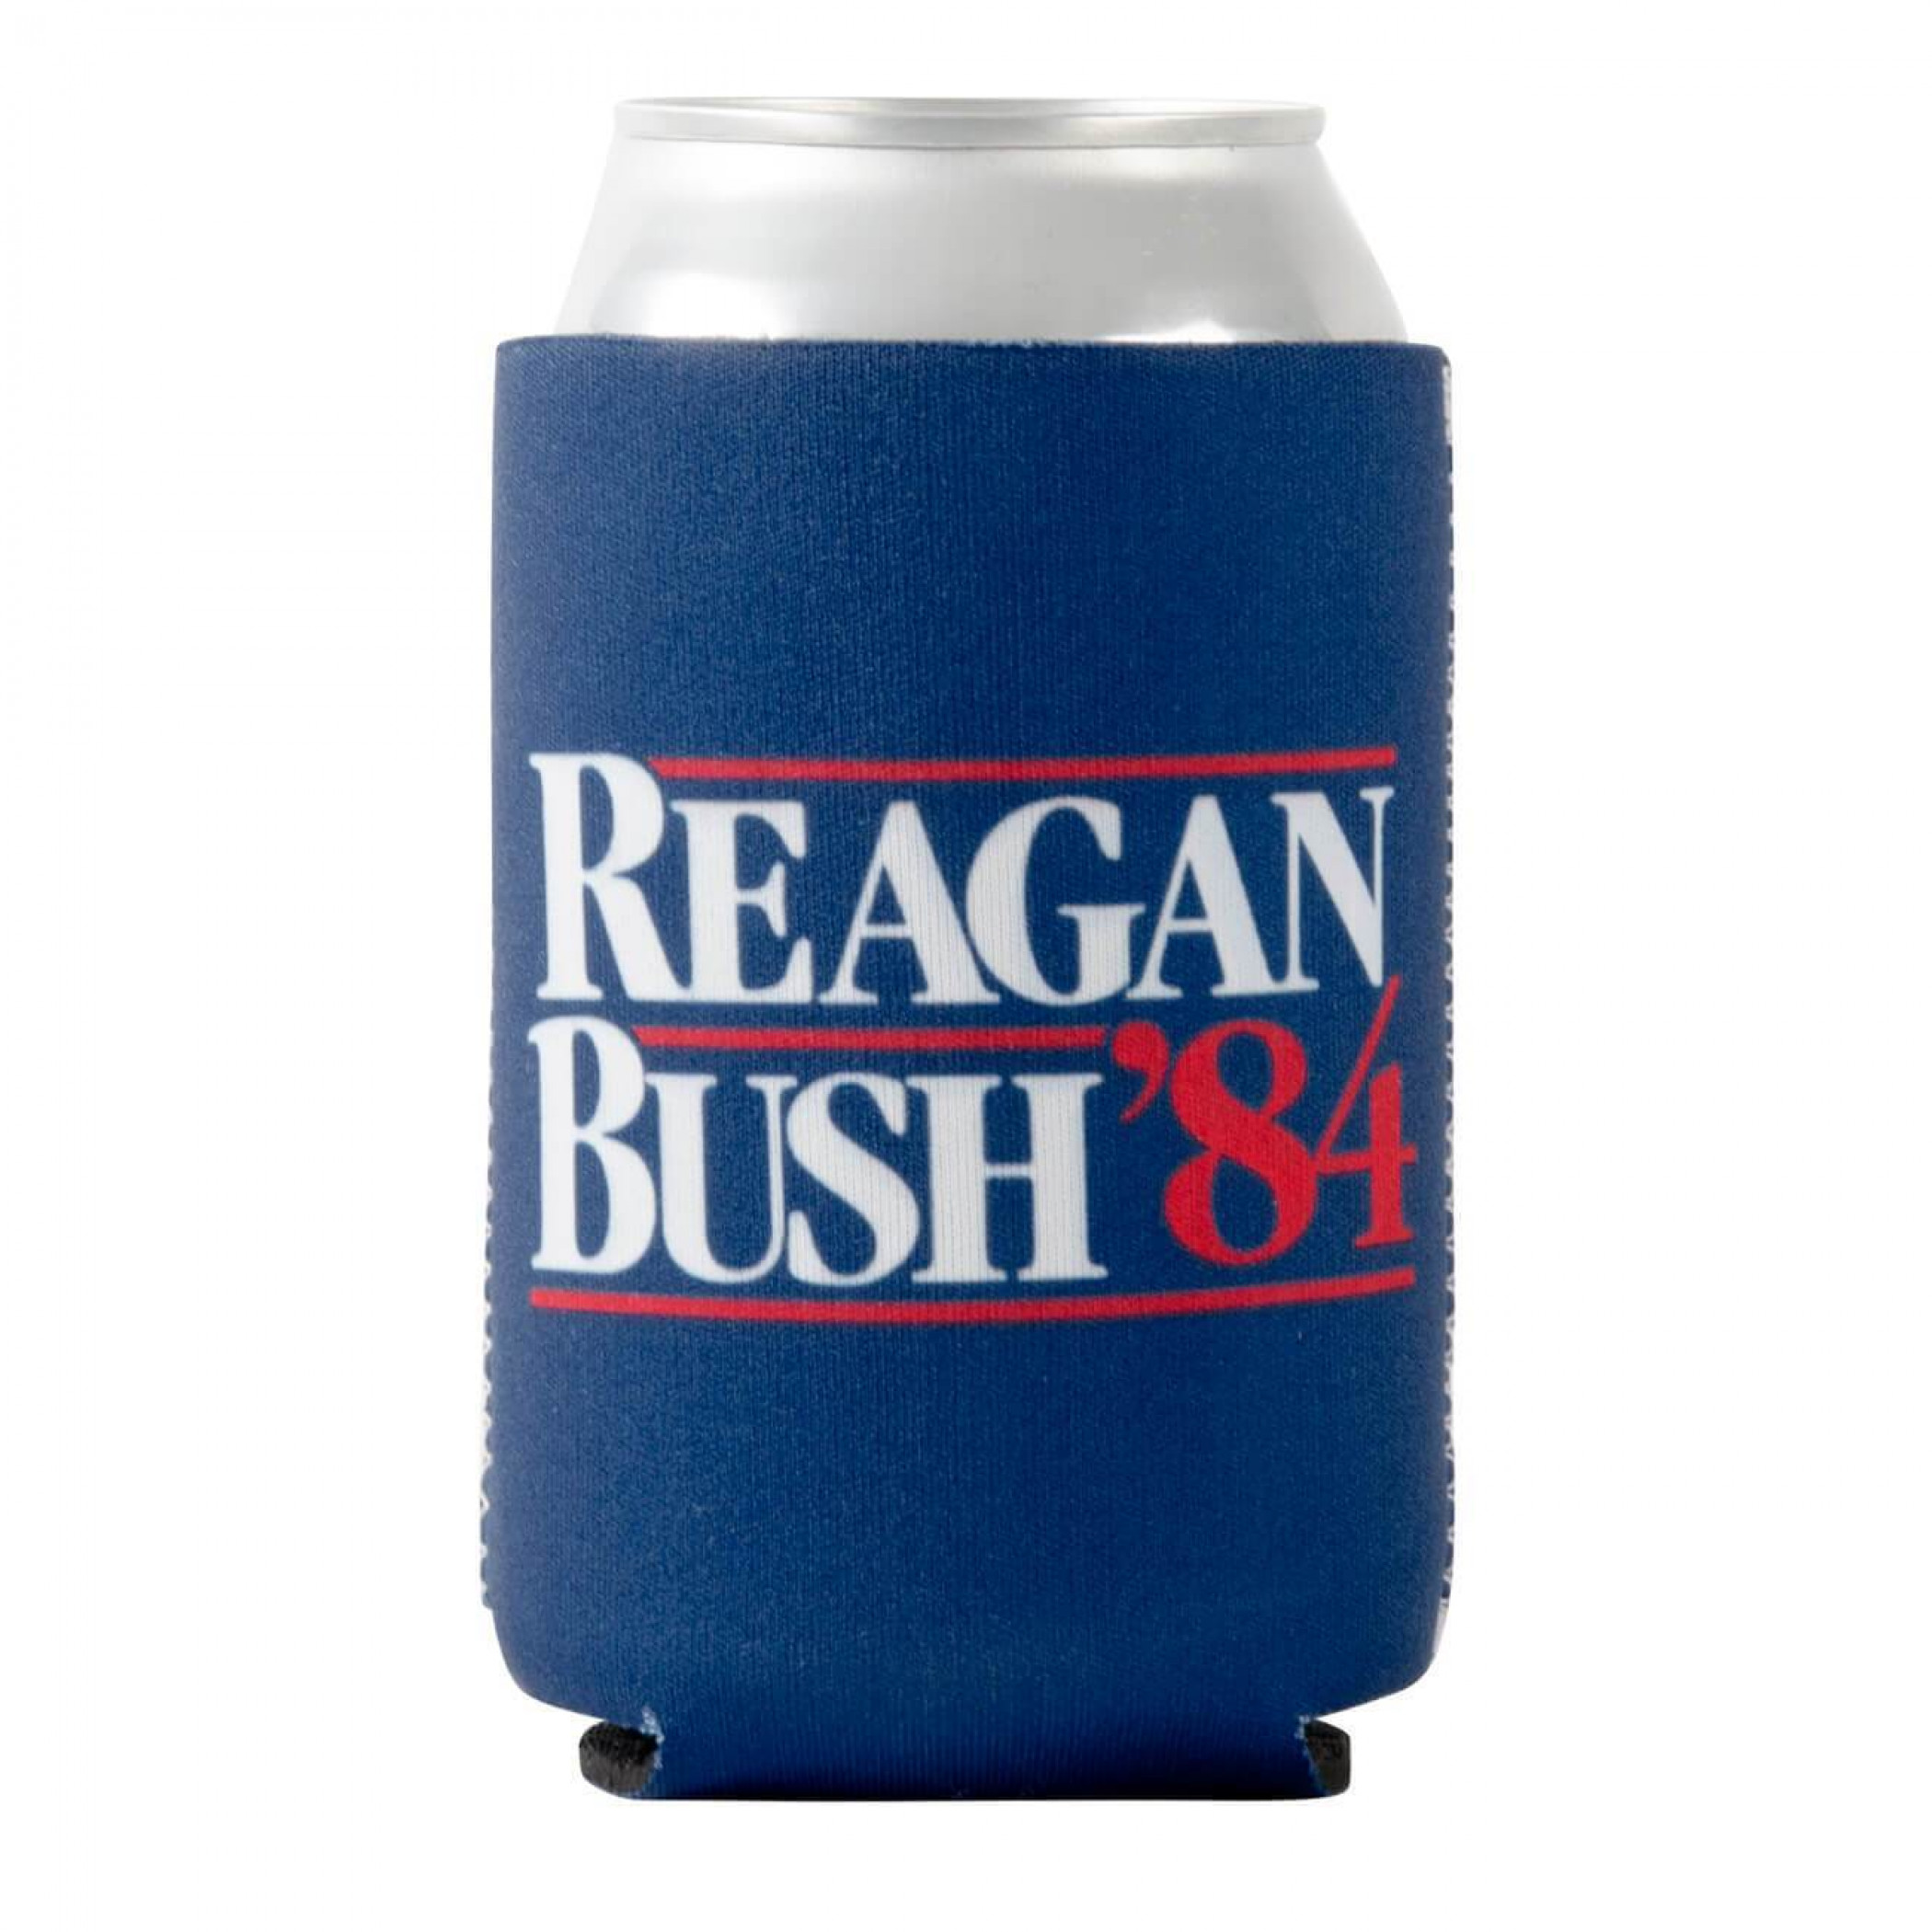 Reagan Bush '84 Beer Sleeve